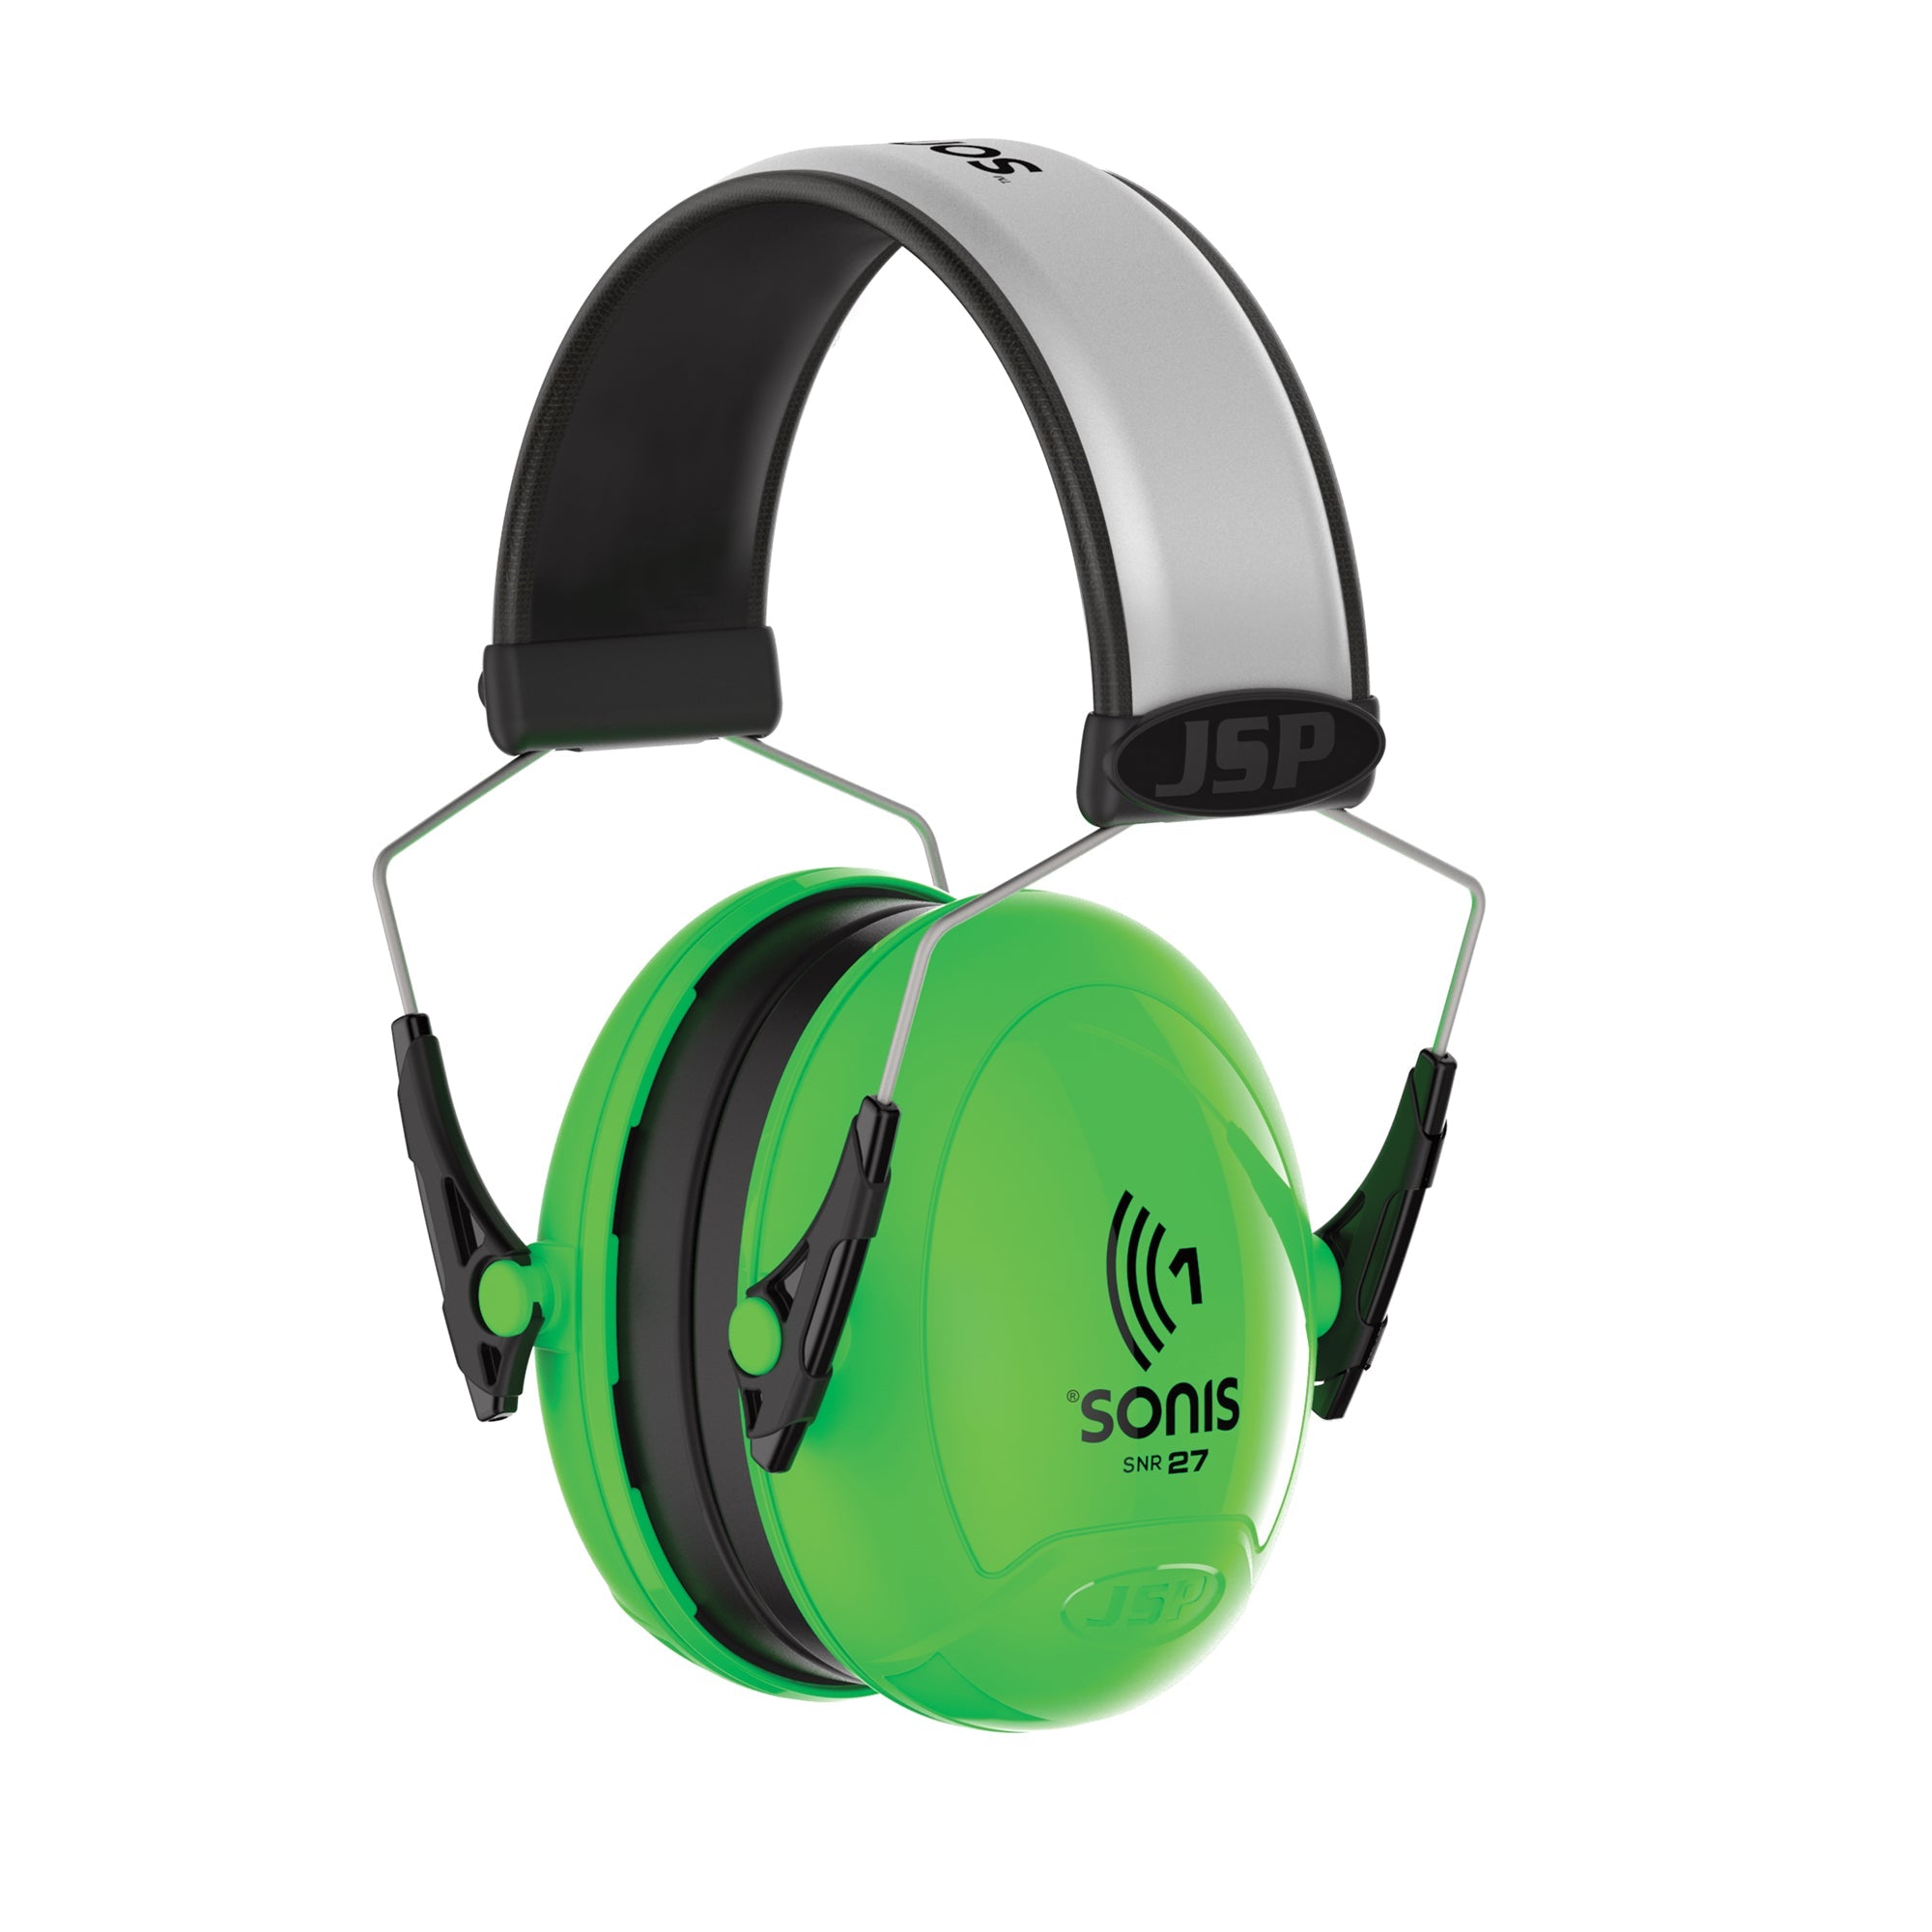 JSP Sonis®1 Adjustable Extra Visibility Ear Defenders 27dB SNR